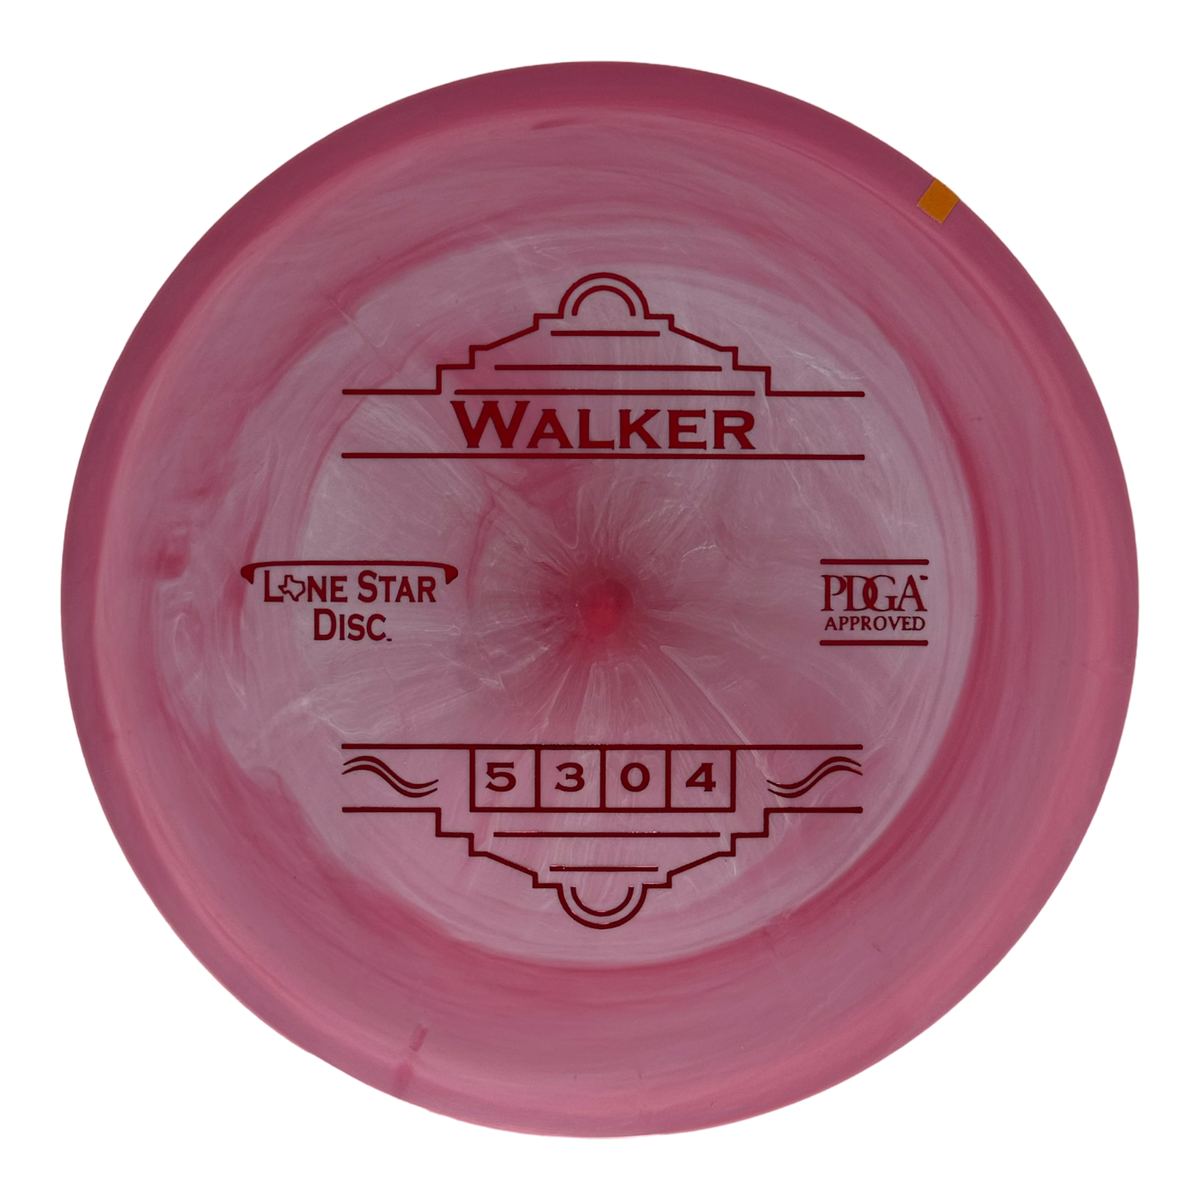 Lone Star Disc Bravo Walker